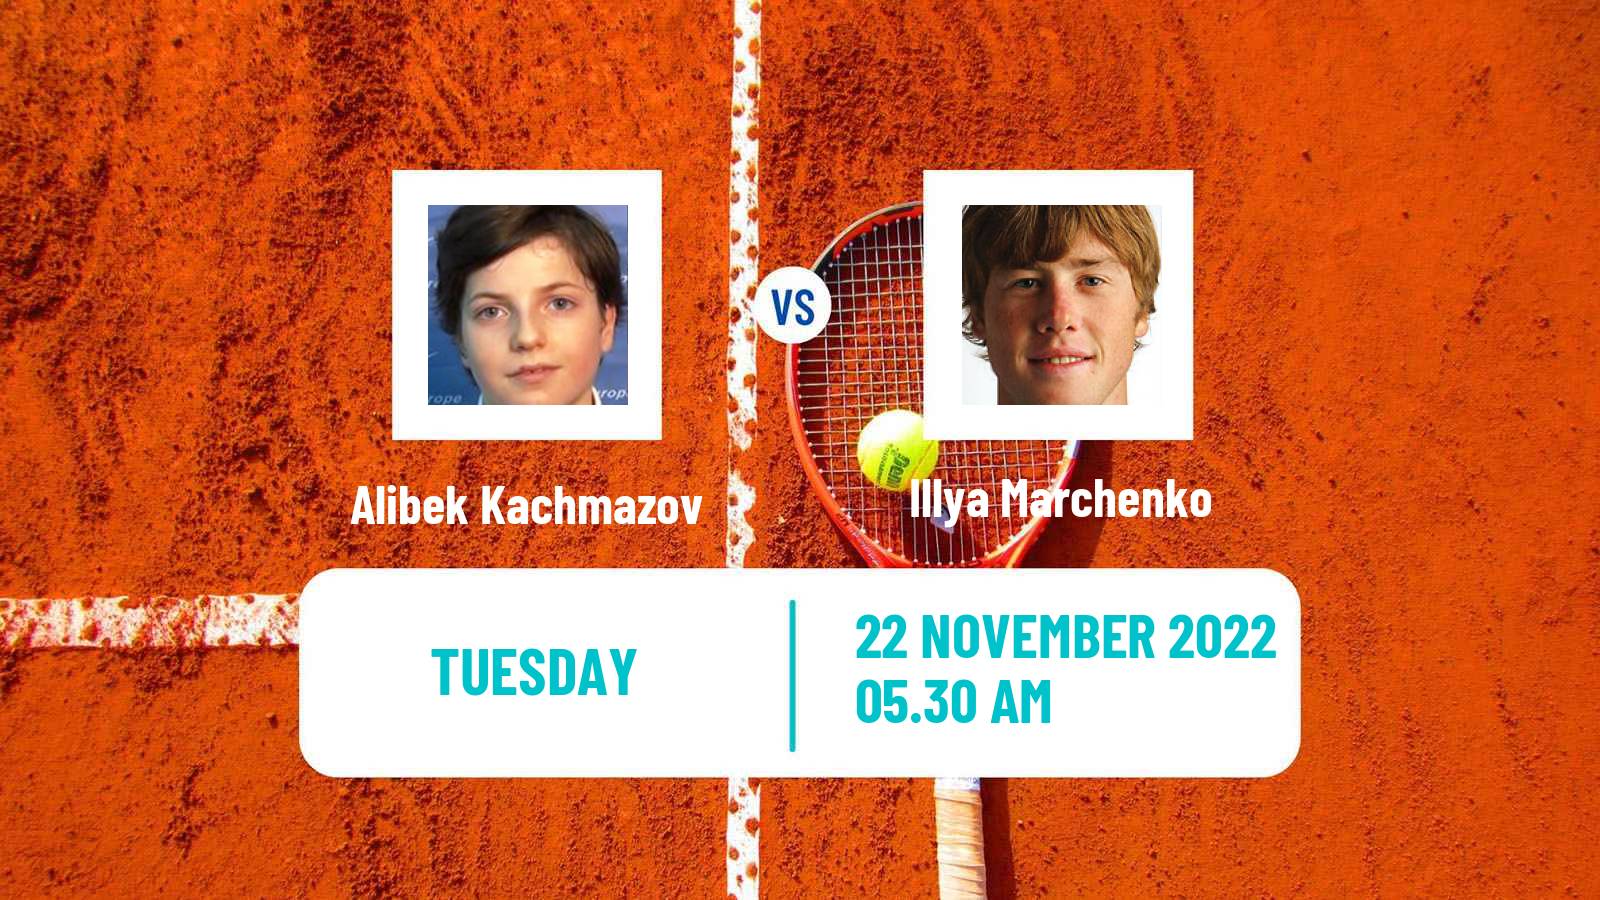 Tennis ATP Challenger Alibek Kachmazov - Illya Marchenko